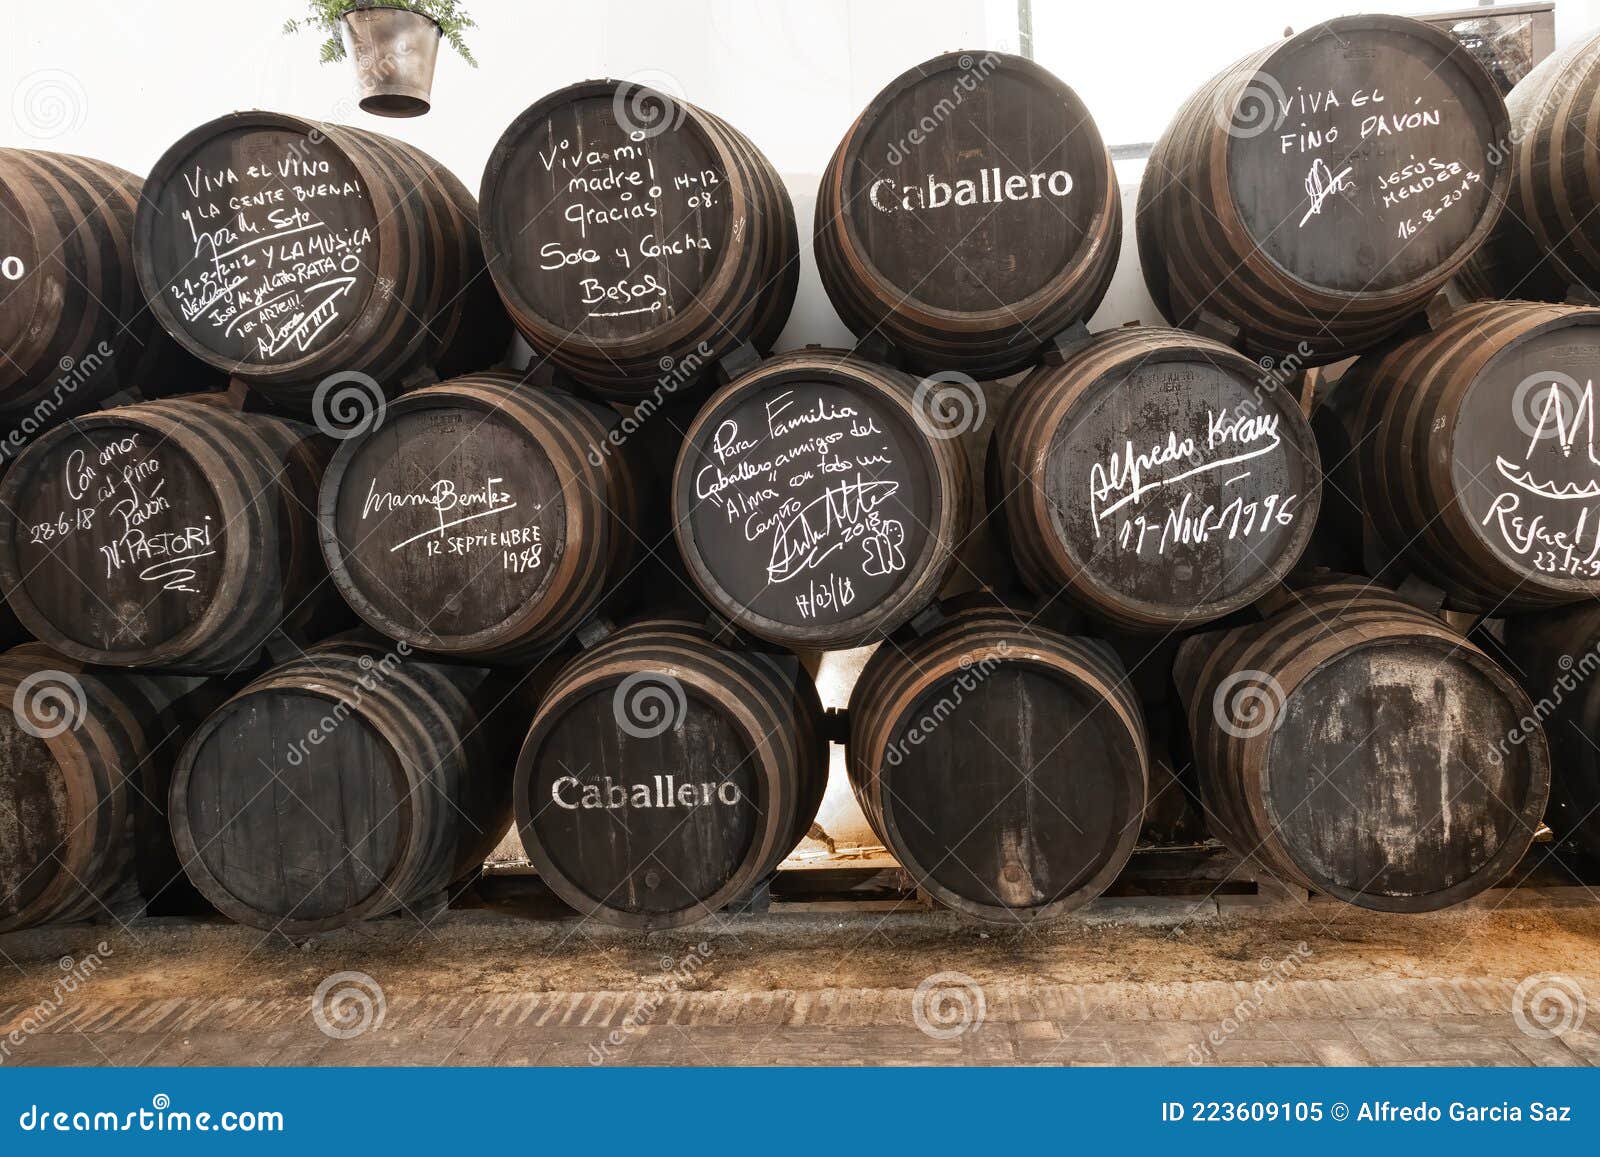 el puerto de santa maria, cadiz, spain - june 15, 2021:  exposure of barrels of caballero in the san marcos castle. in wineries